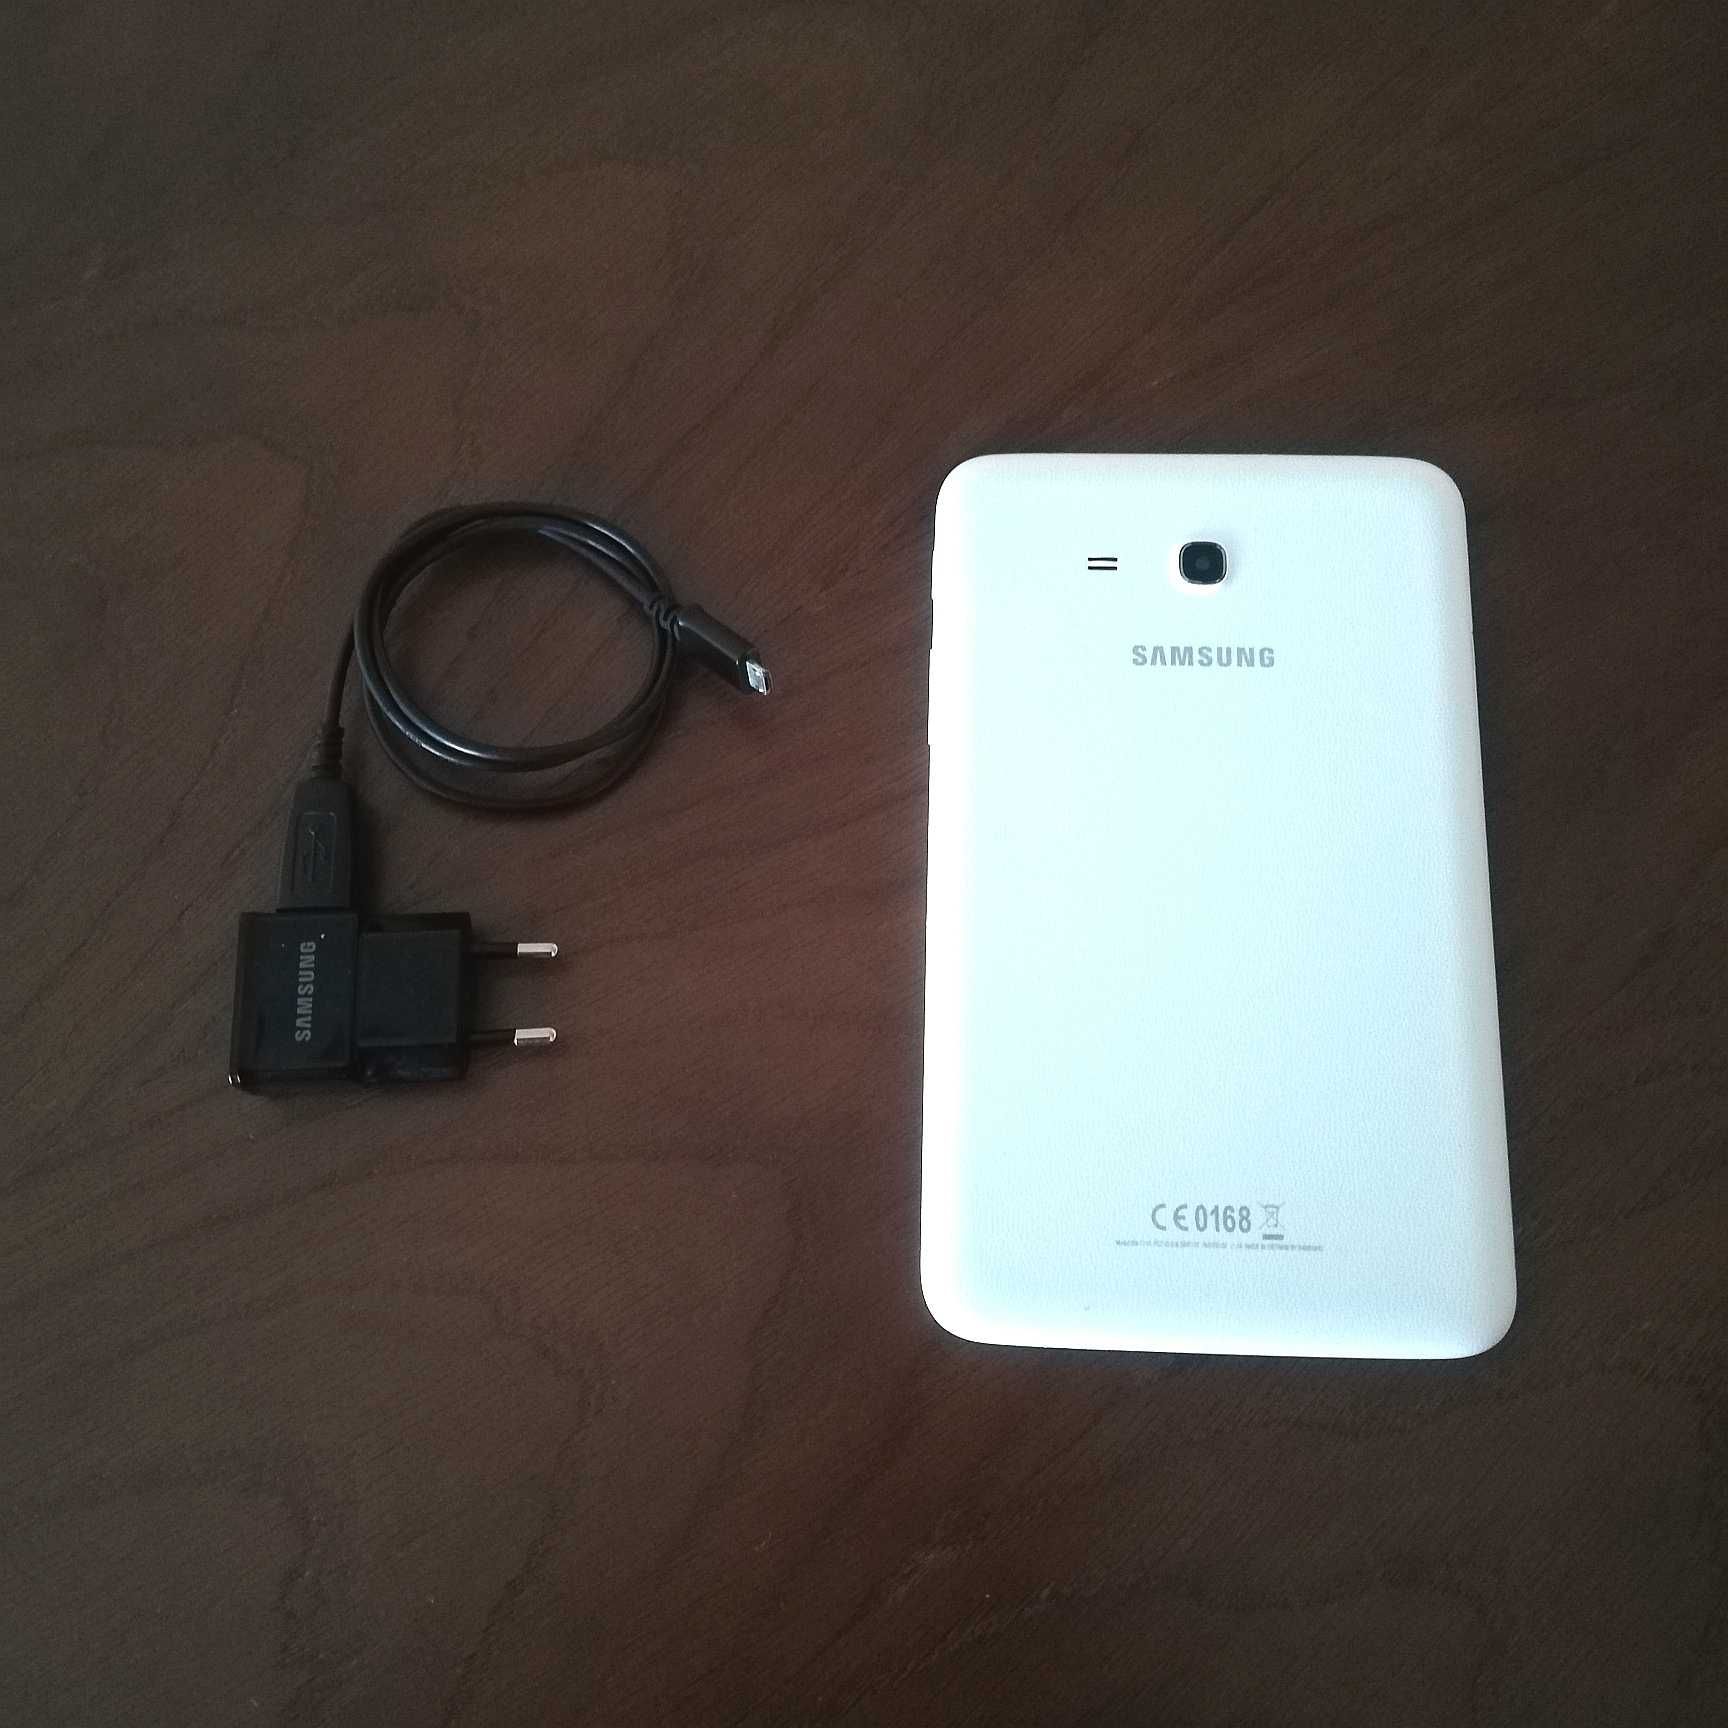 Samsung Tab 3 Lite branco com bolsa